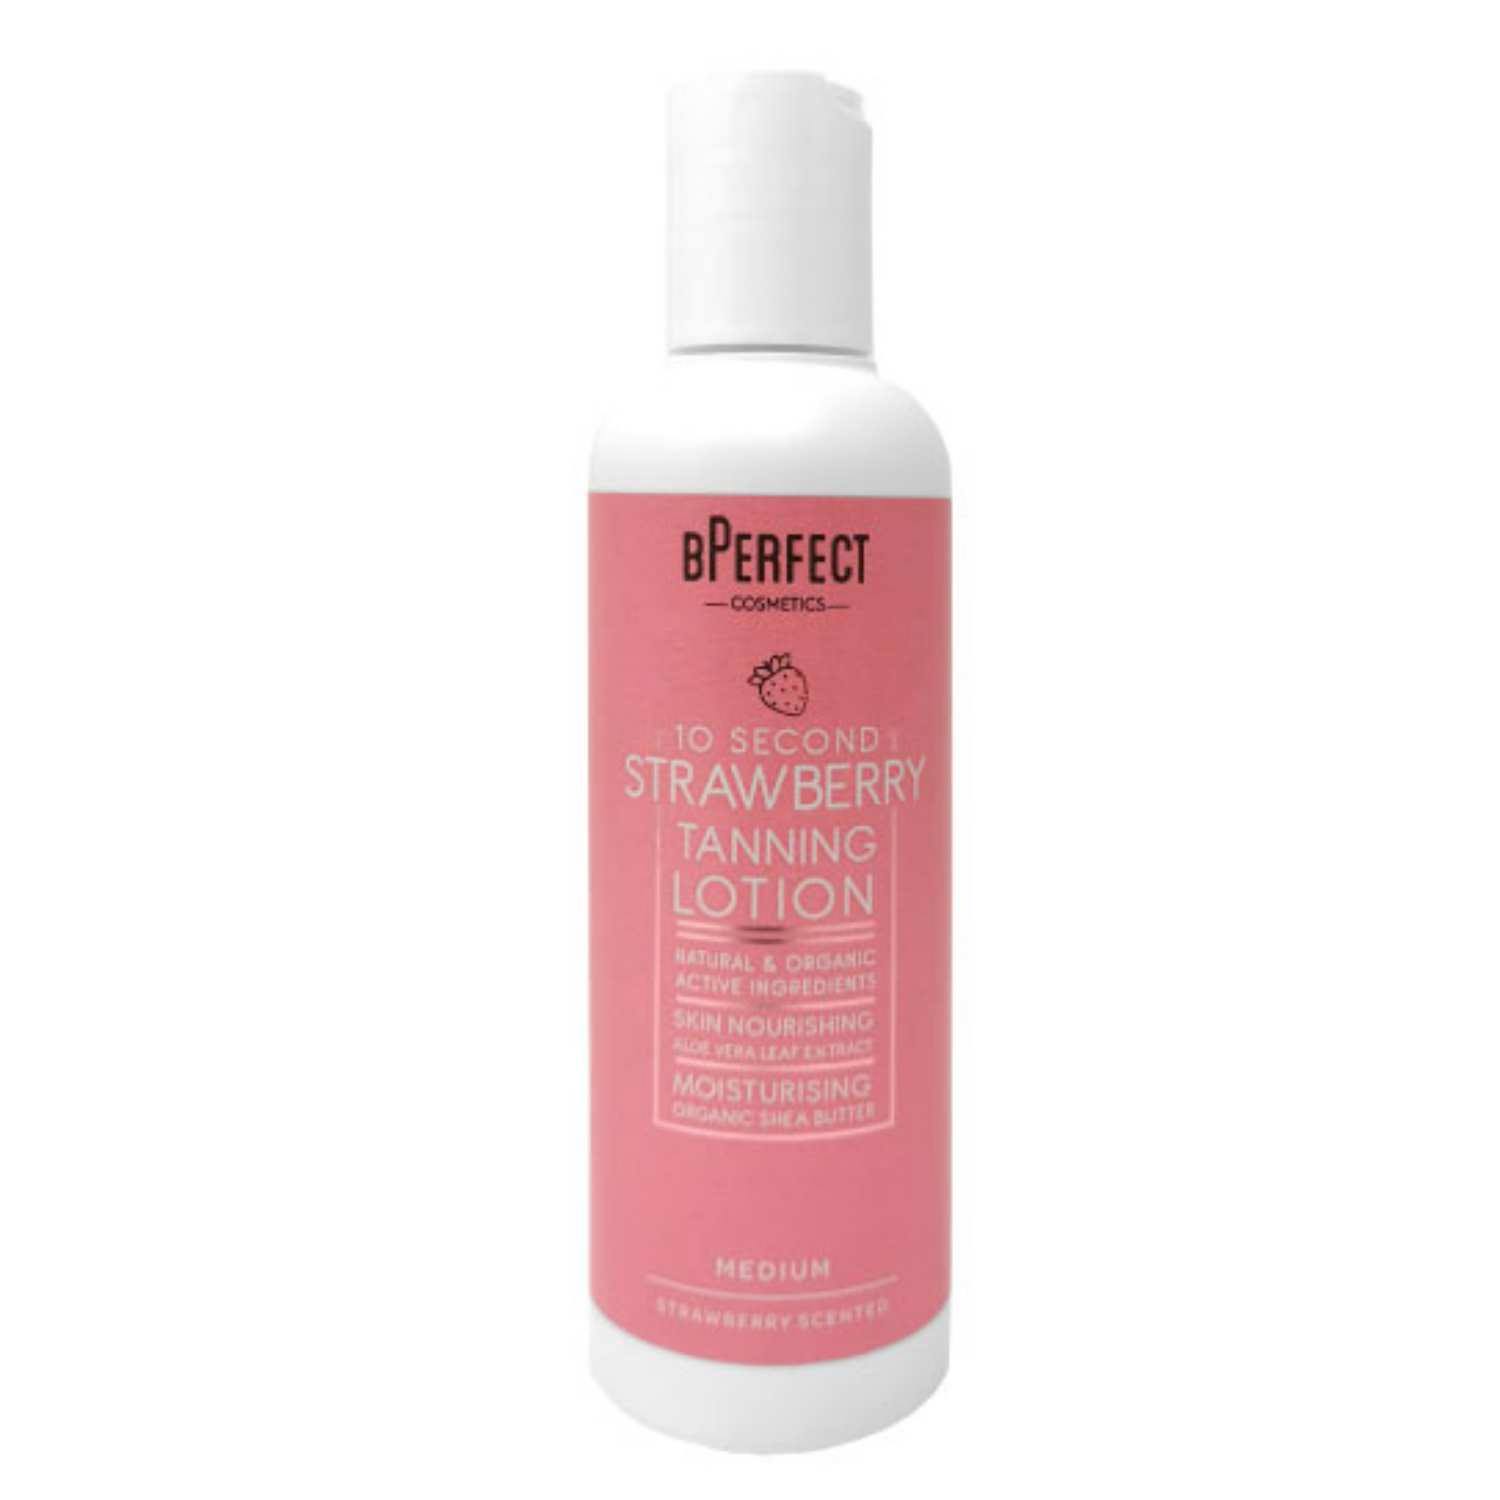 BPerfect 10 Second Strawberry Tanning Lotion – Medium